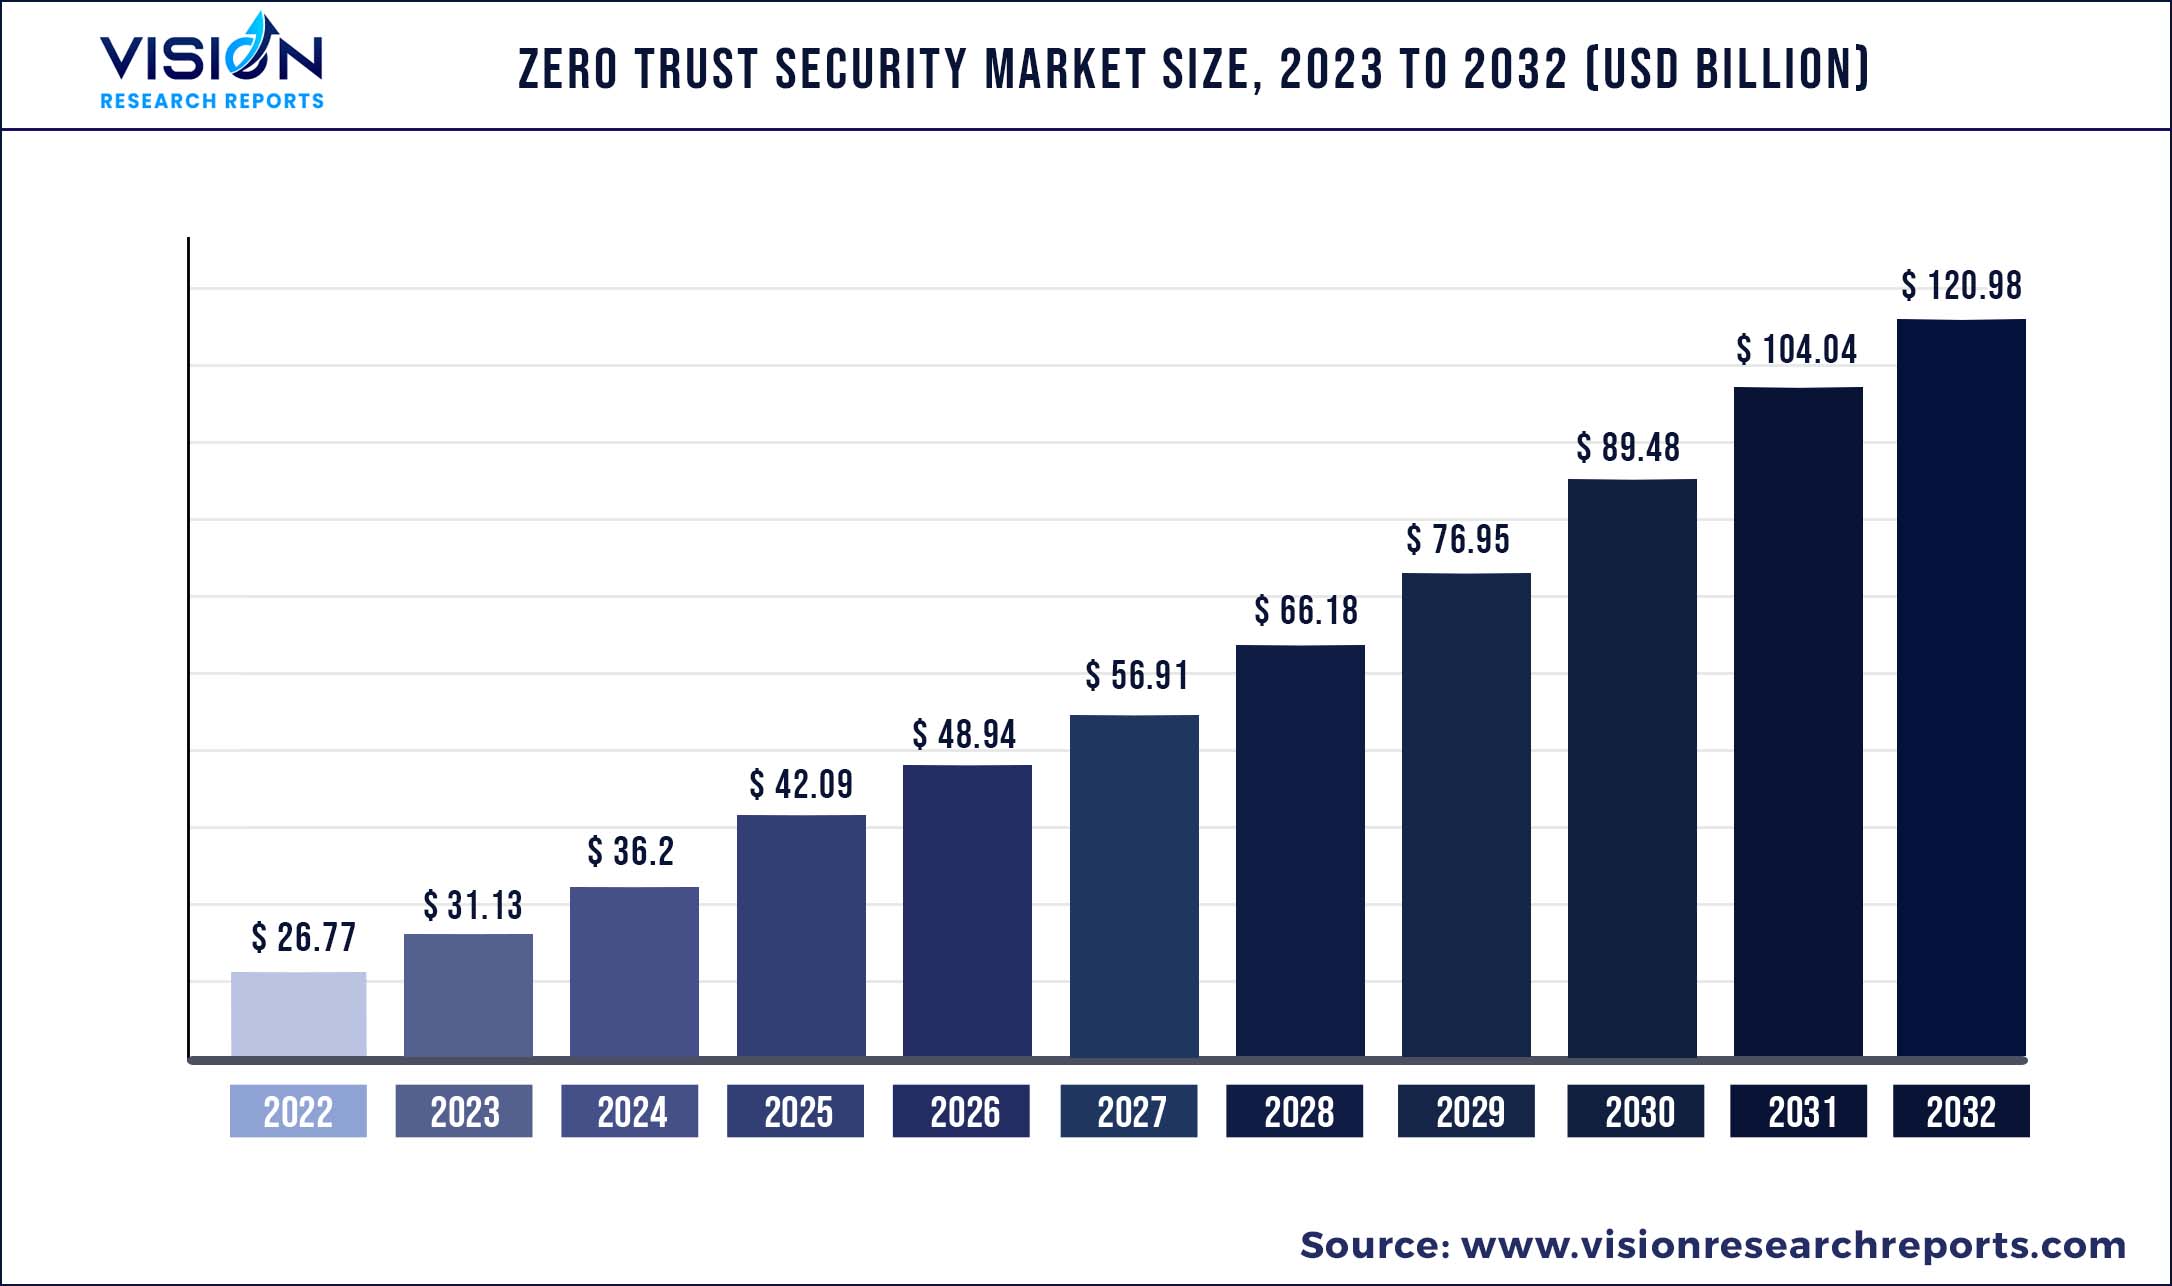 Zero Trust Security Market Size 2023 to 2032